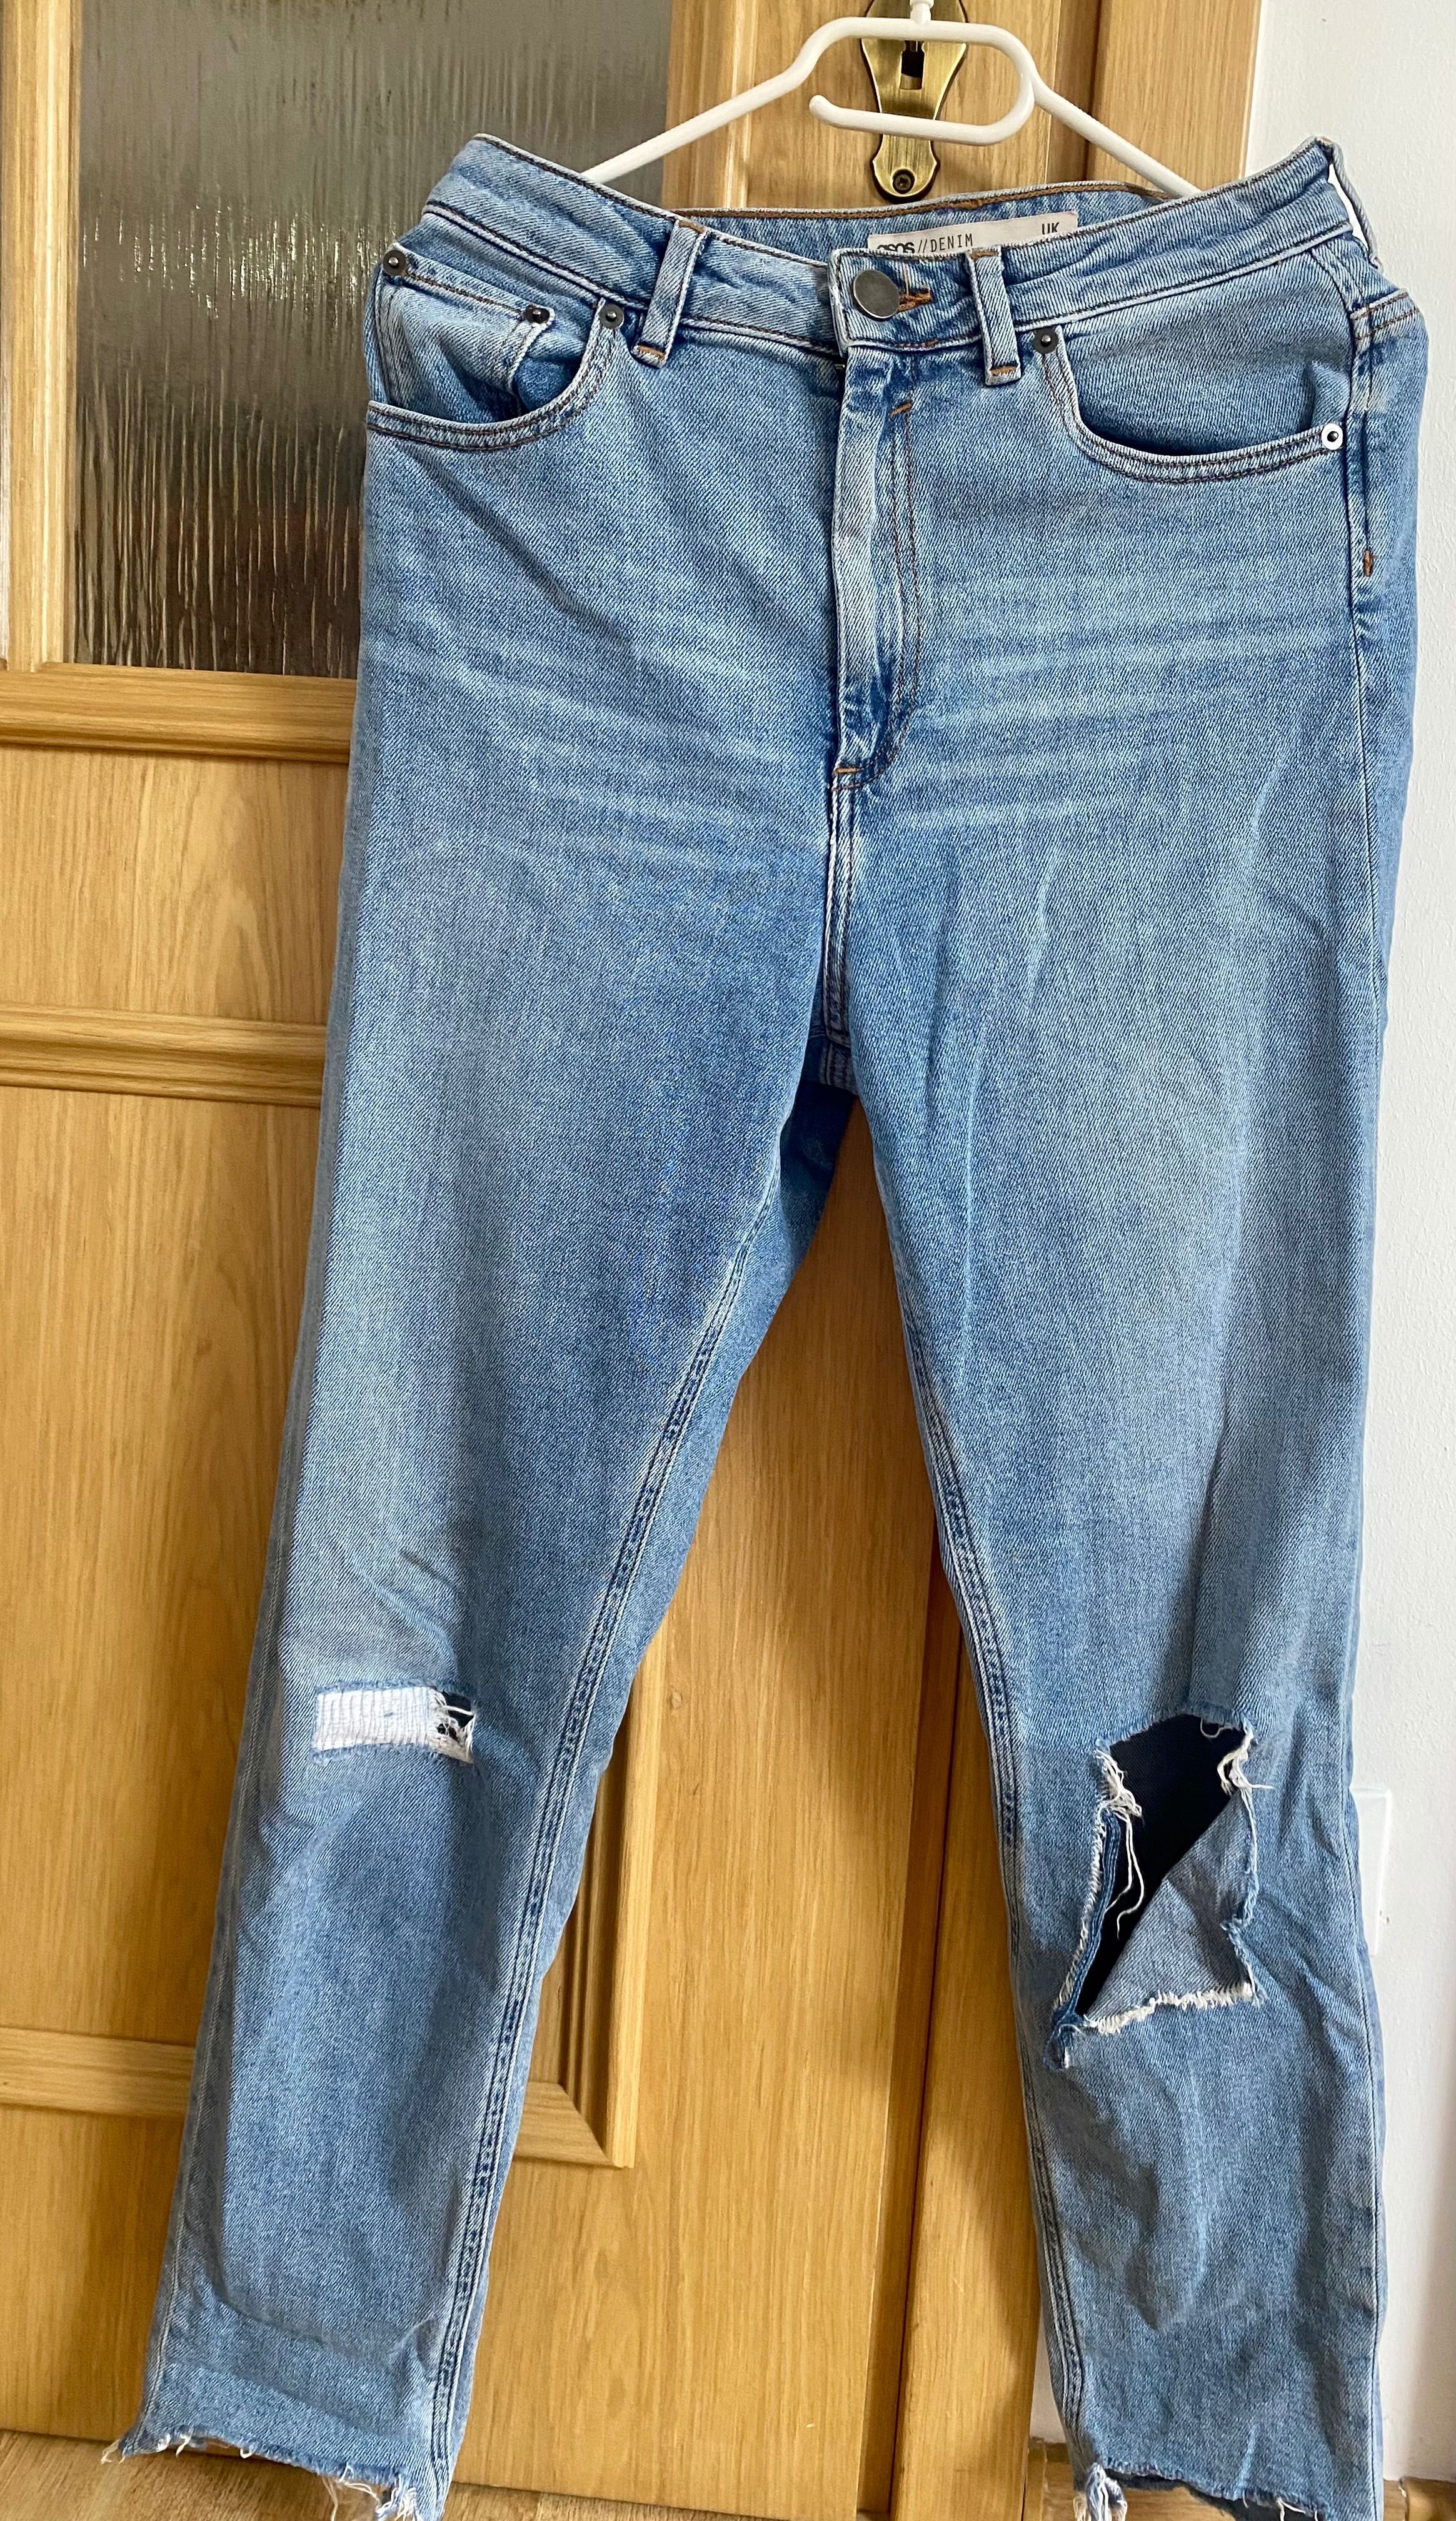 Spodnie jeansy jasne